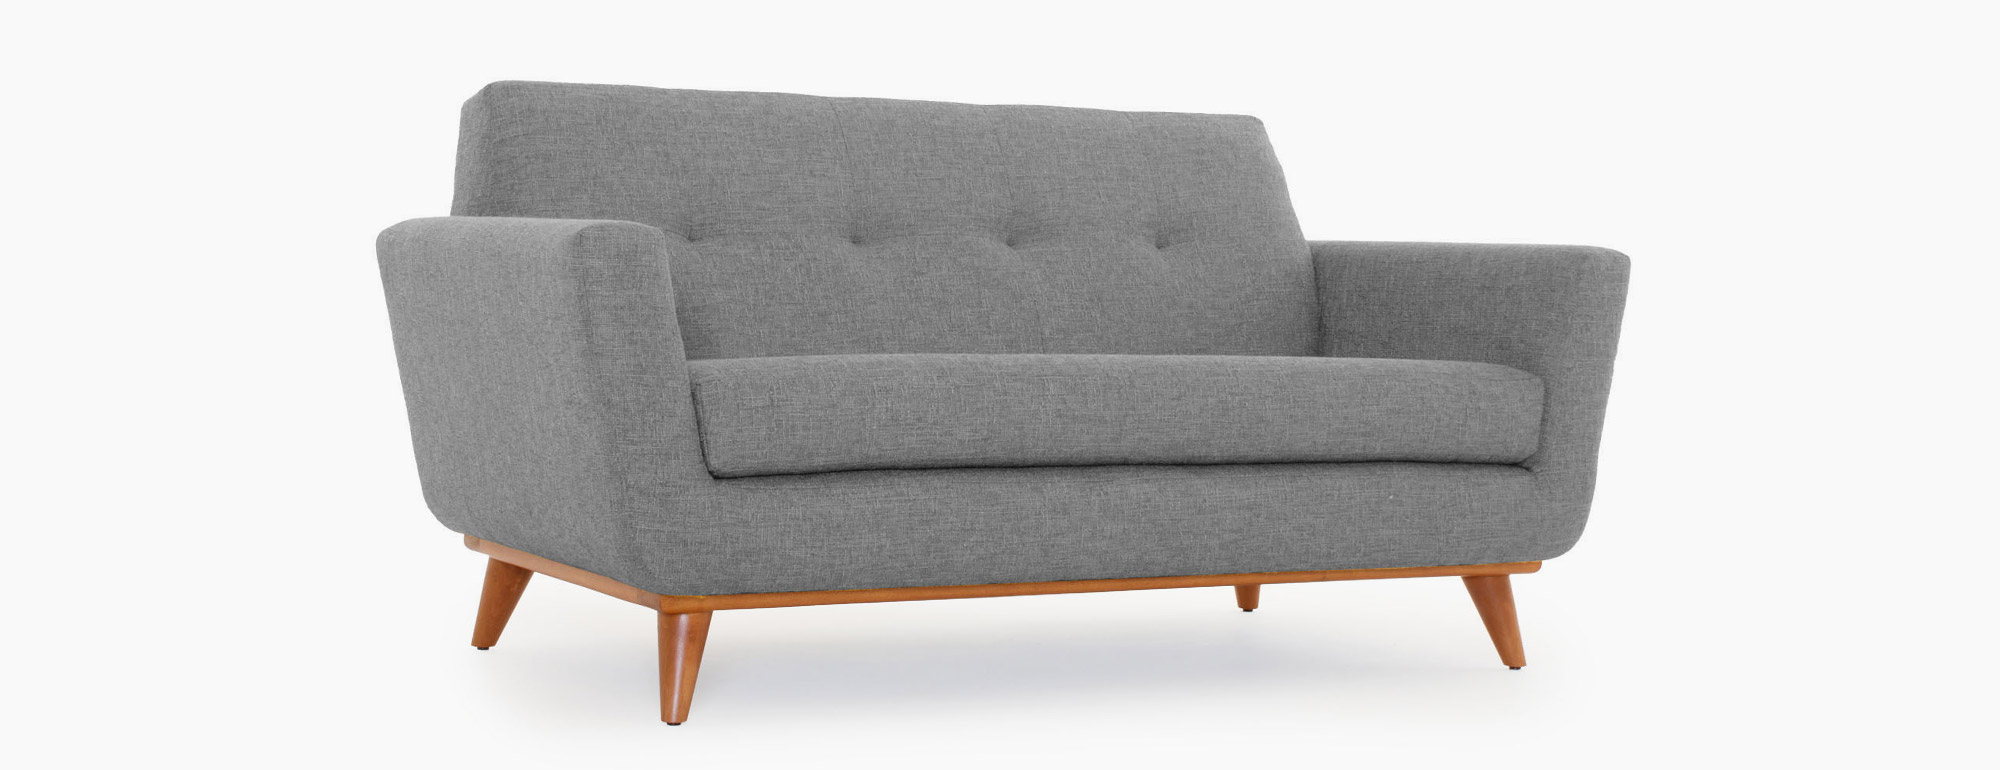 apartment sofa shown in taylor felt grey fabric LTFPLDS